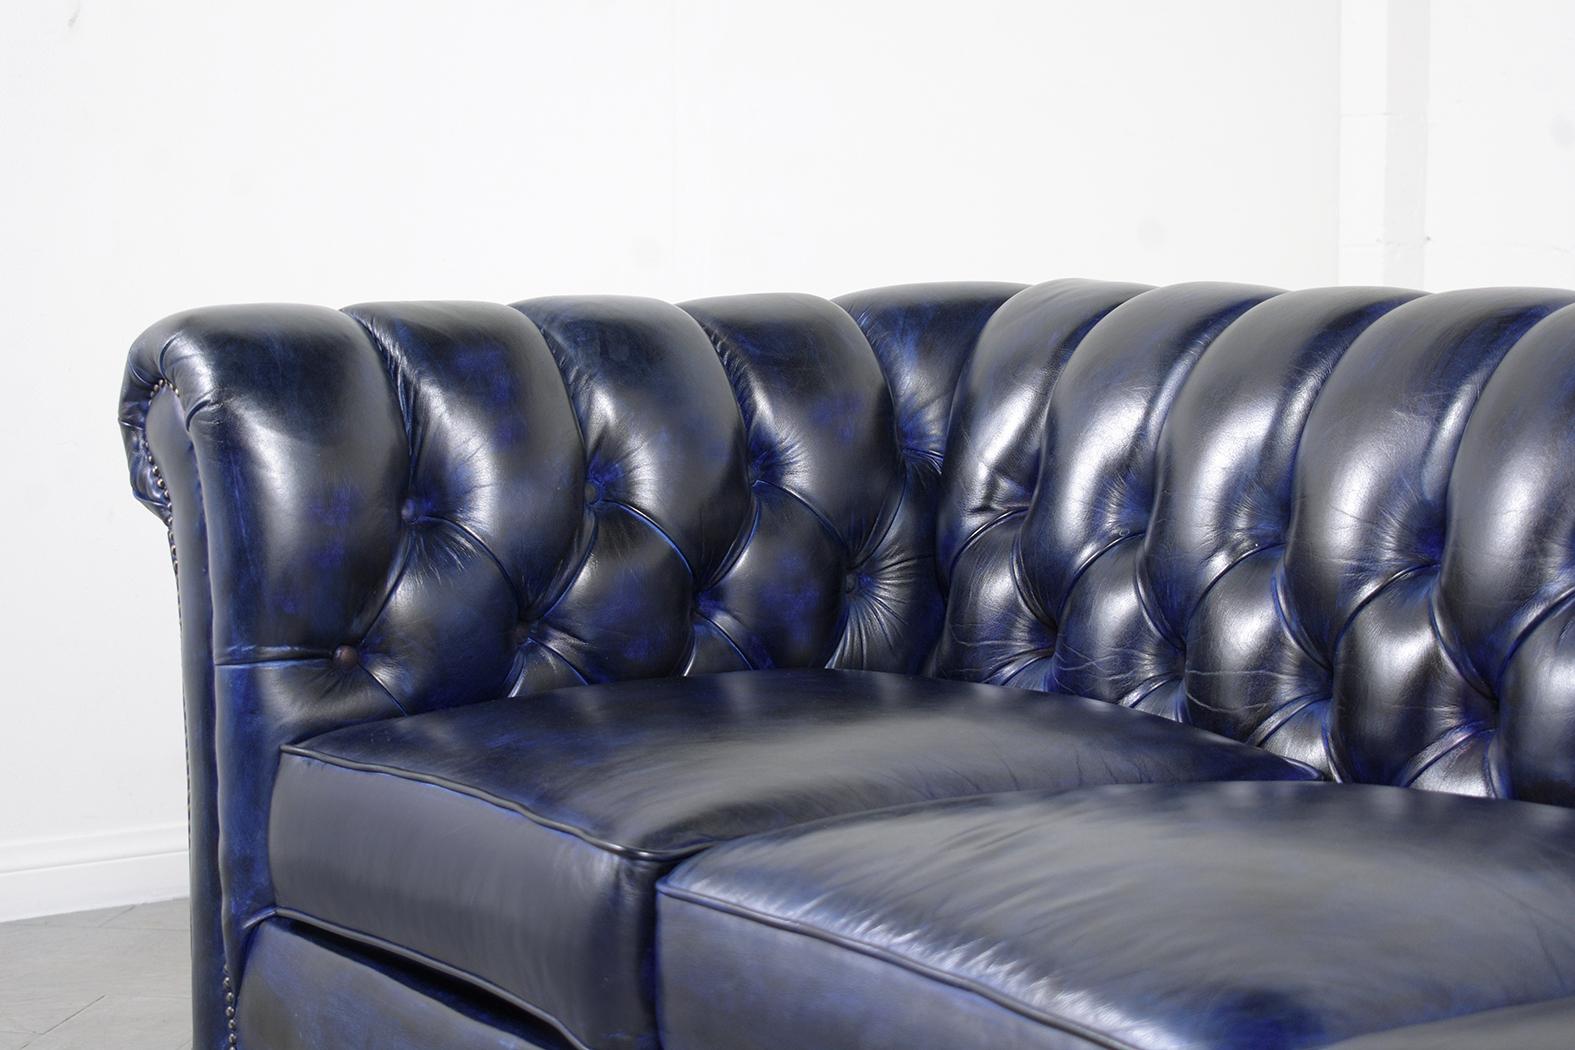 European Vintage Chesterfield Leather Sofa